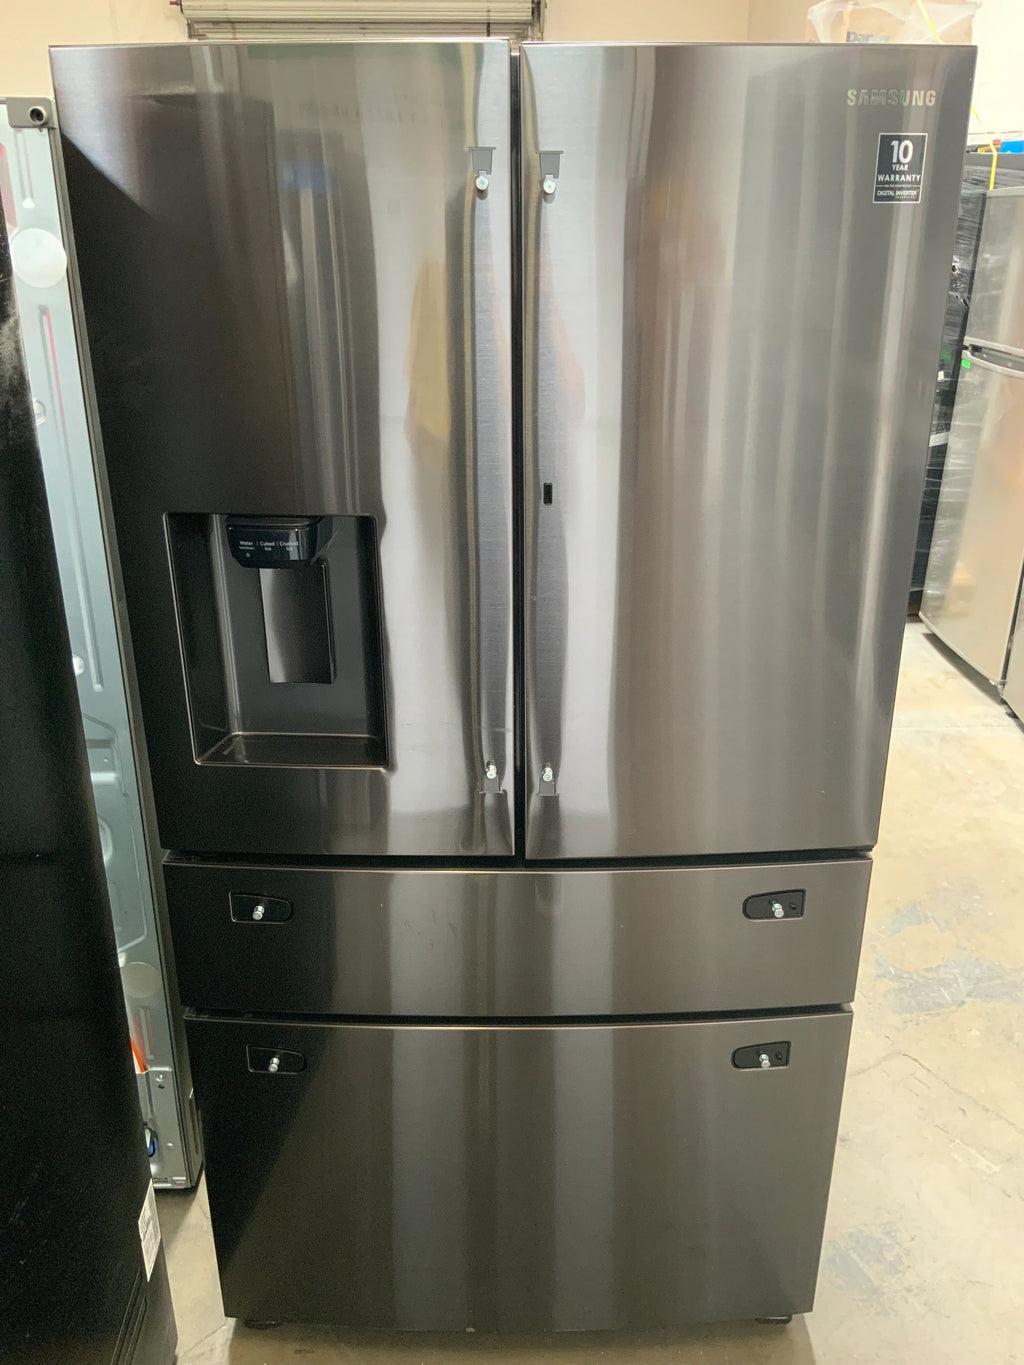 New Open Box 28 cu. ft. Food Showcase 4-Door French Door Refrigerator in Black Stainless Steel Model: RF28R7351SG